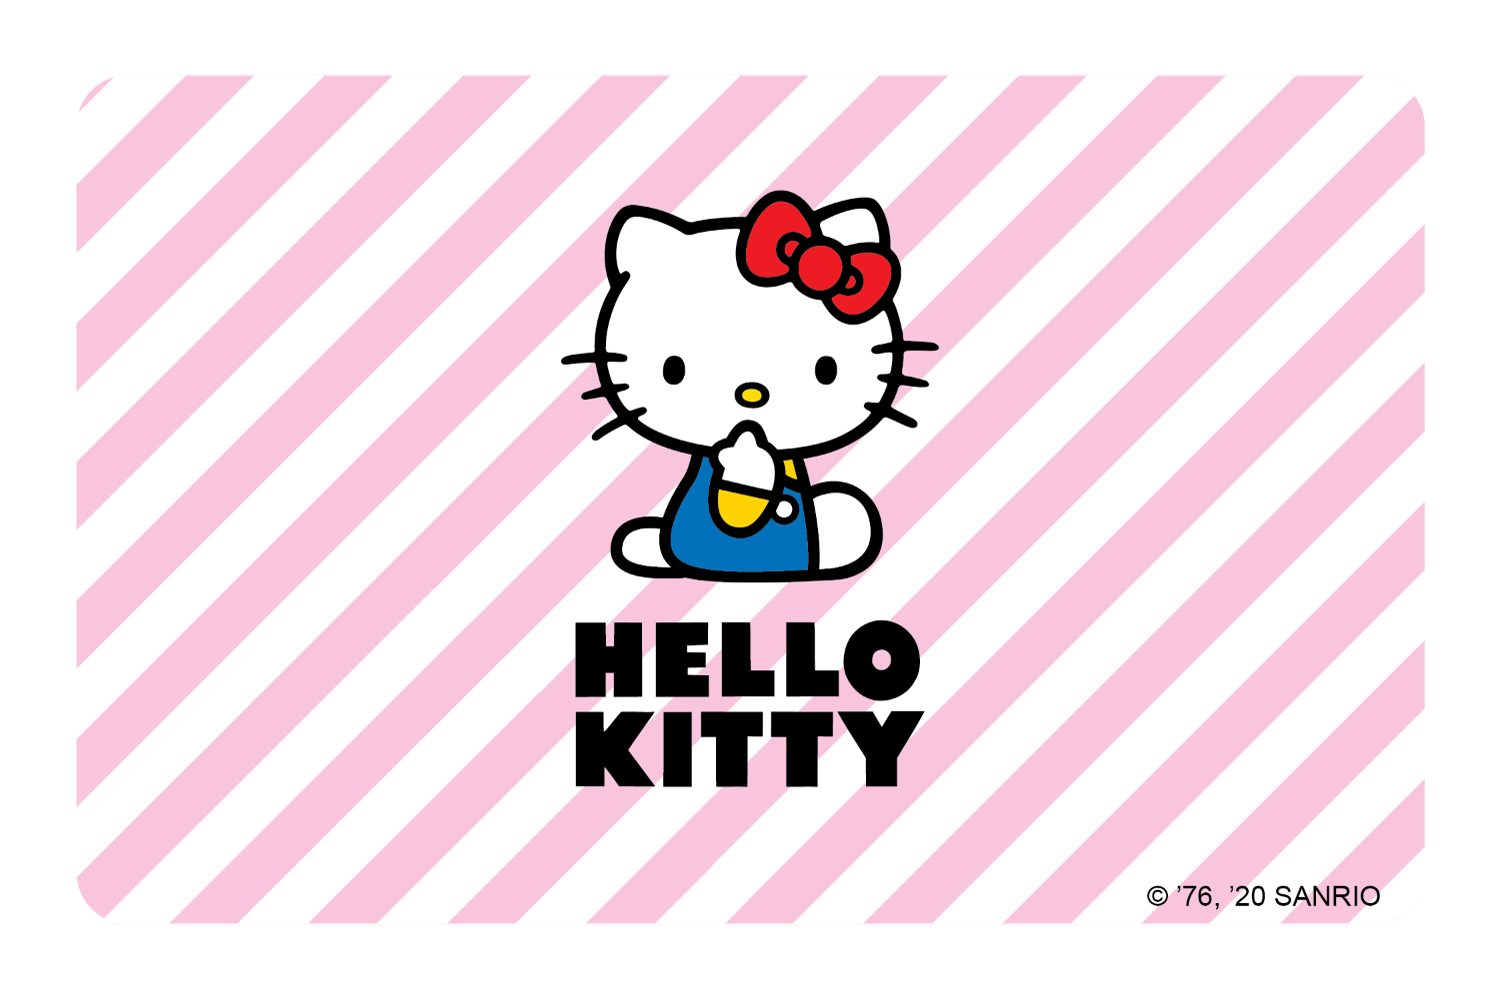 Hello kitty wallpaper, Hello kitty backgrounds, Hello kitty purse